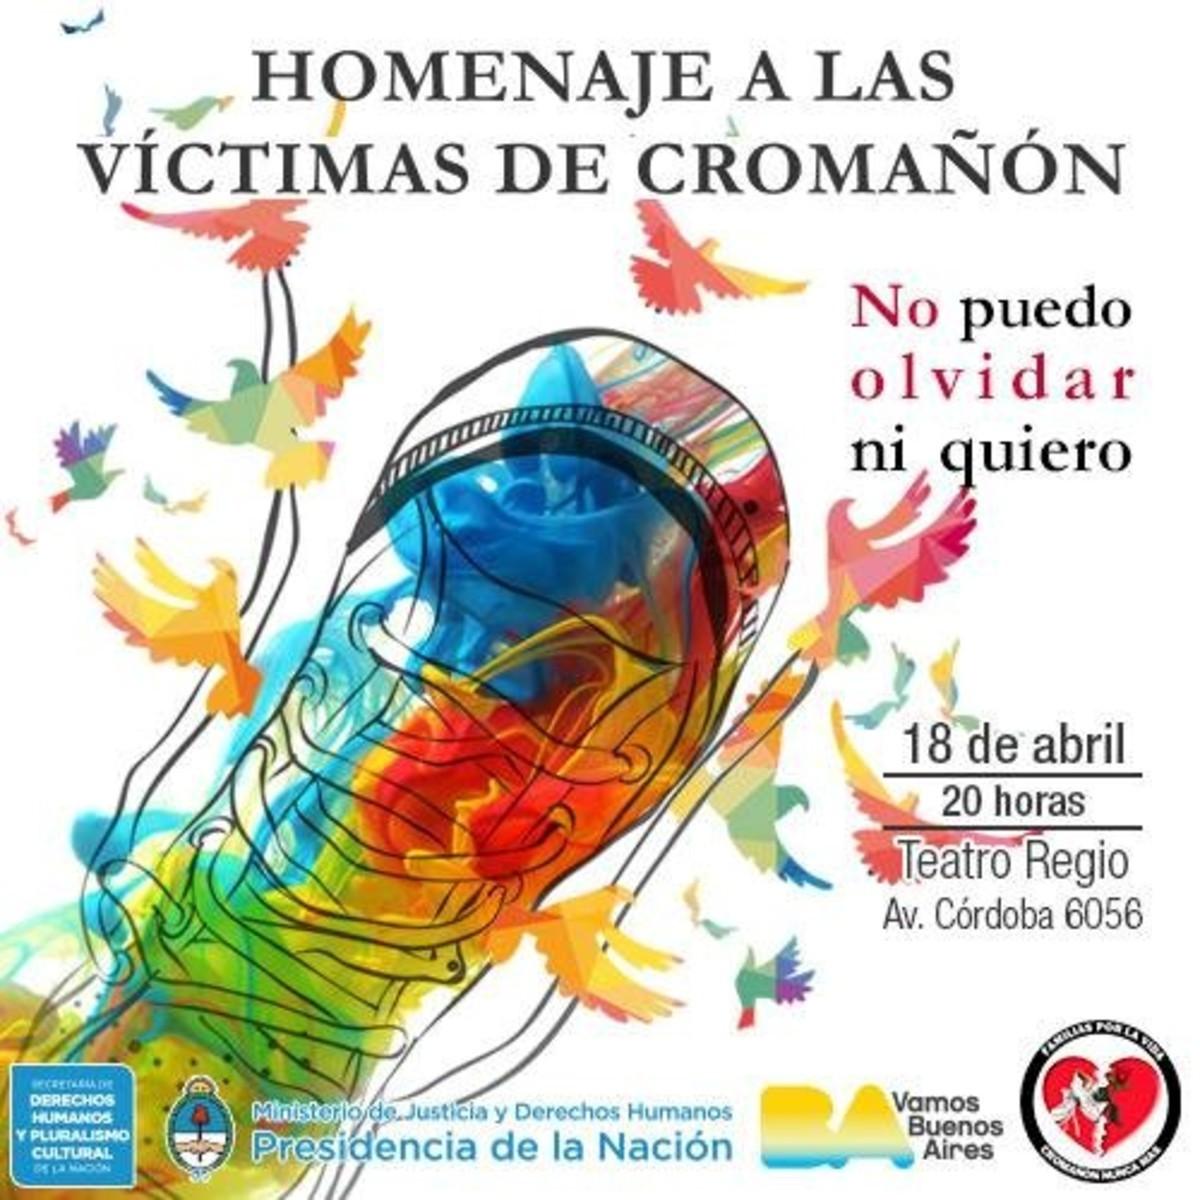 Homenaje a las víctimas de Cromañón. FOTO TOMADA DE CLARÍN.COM